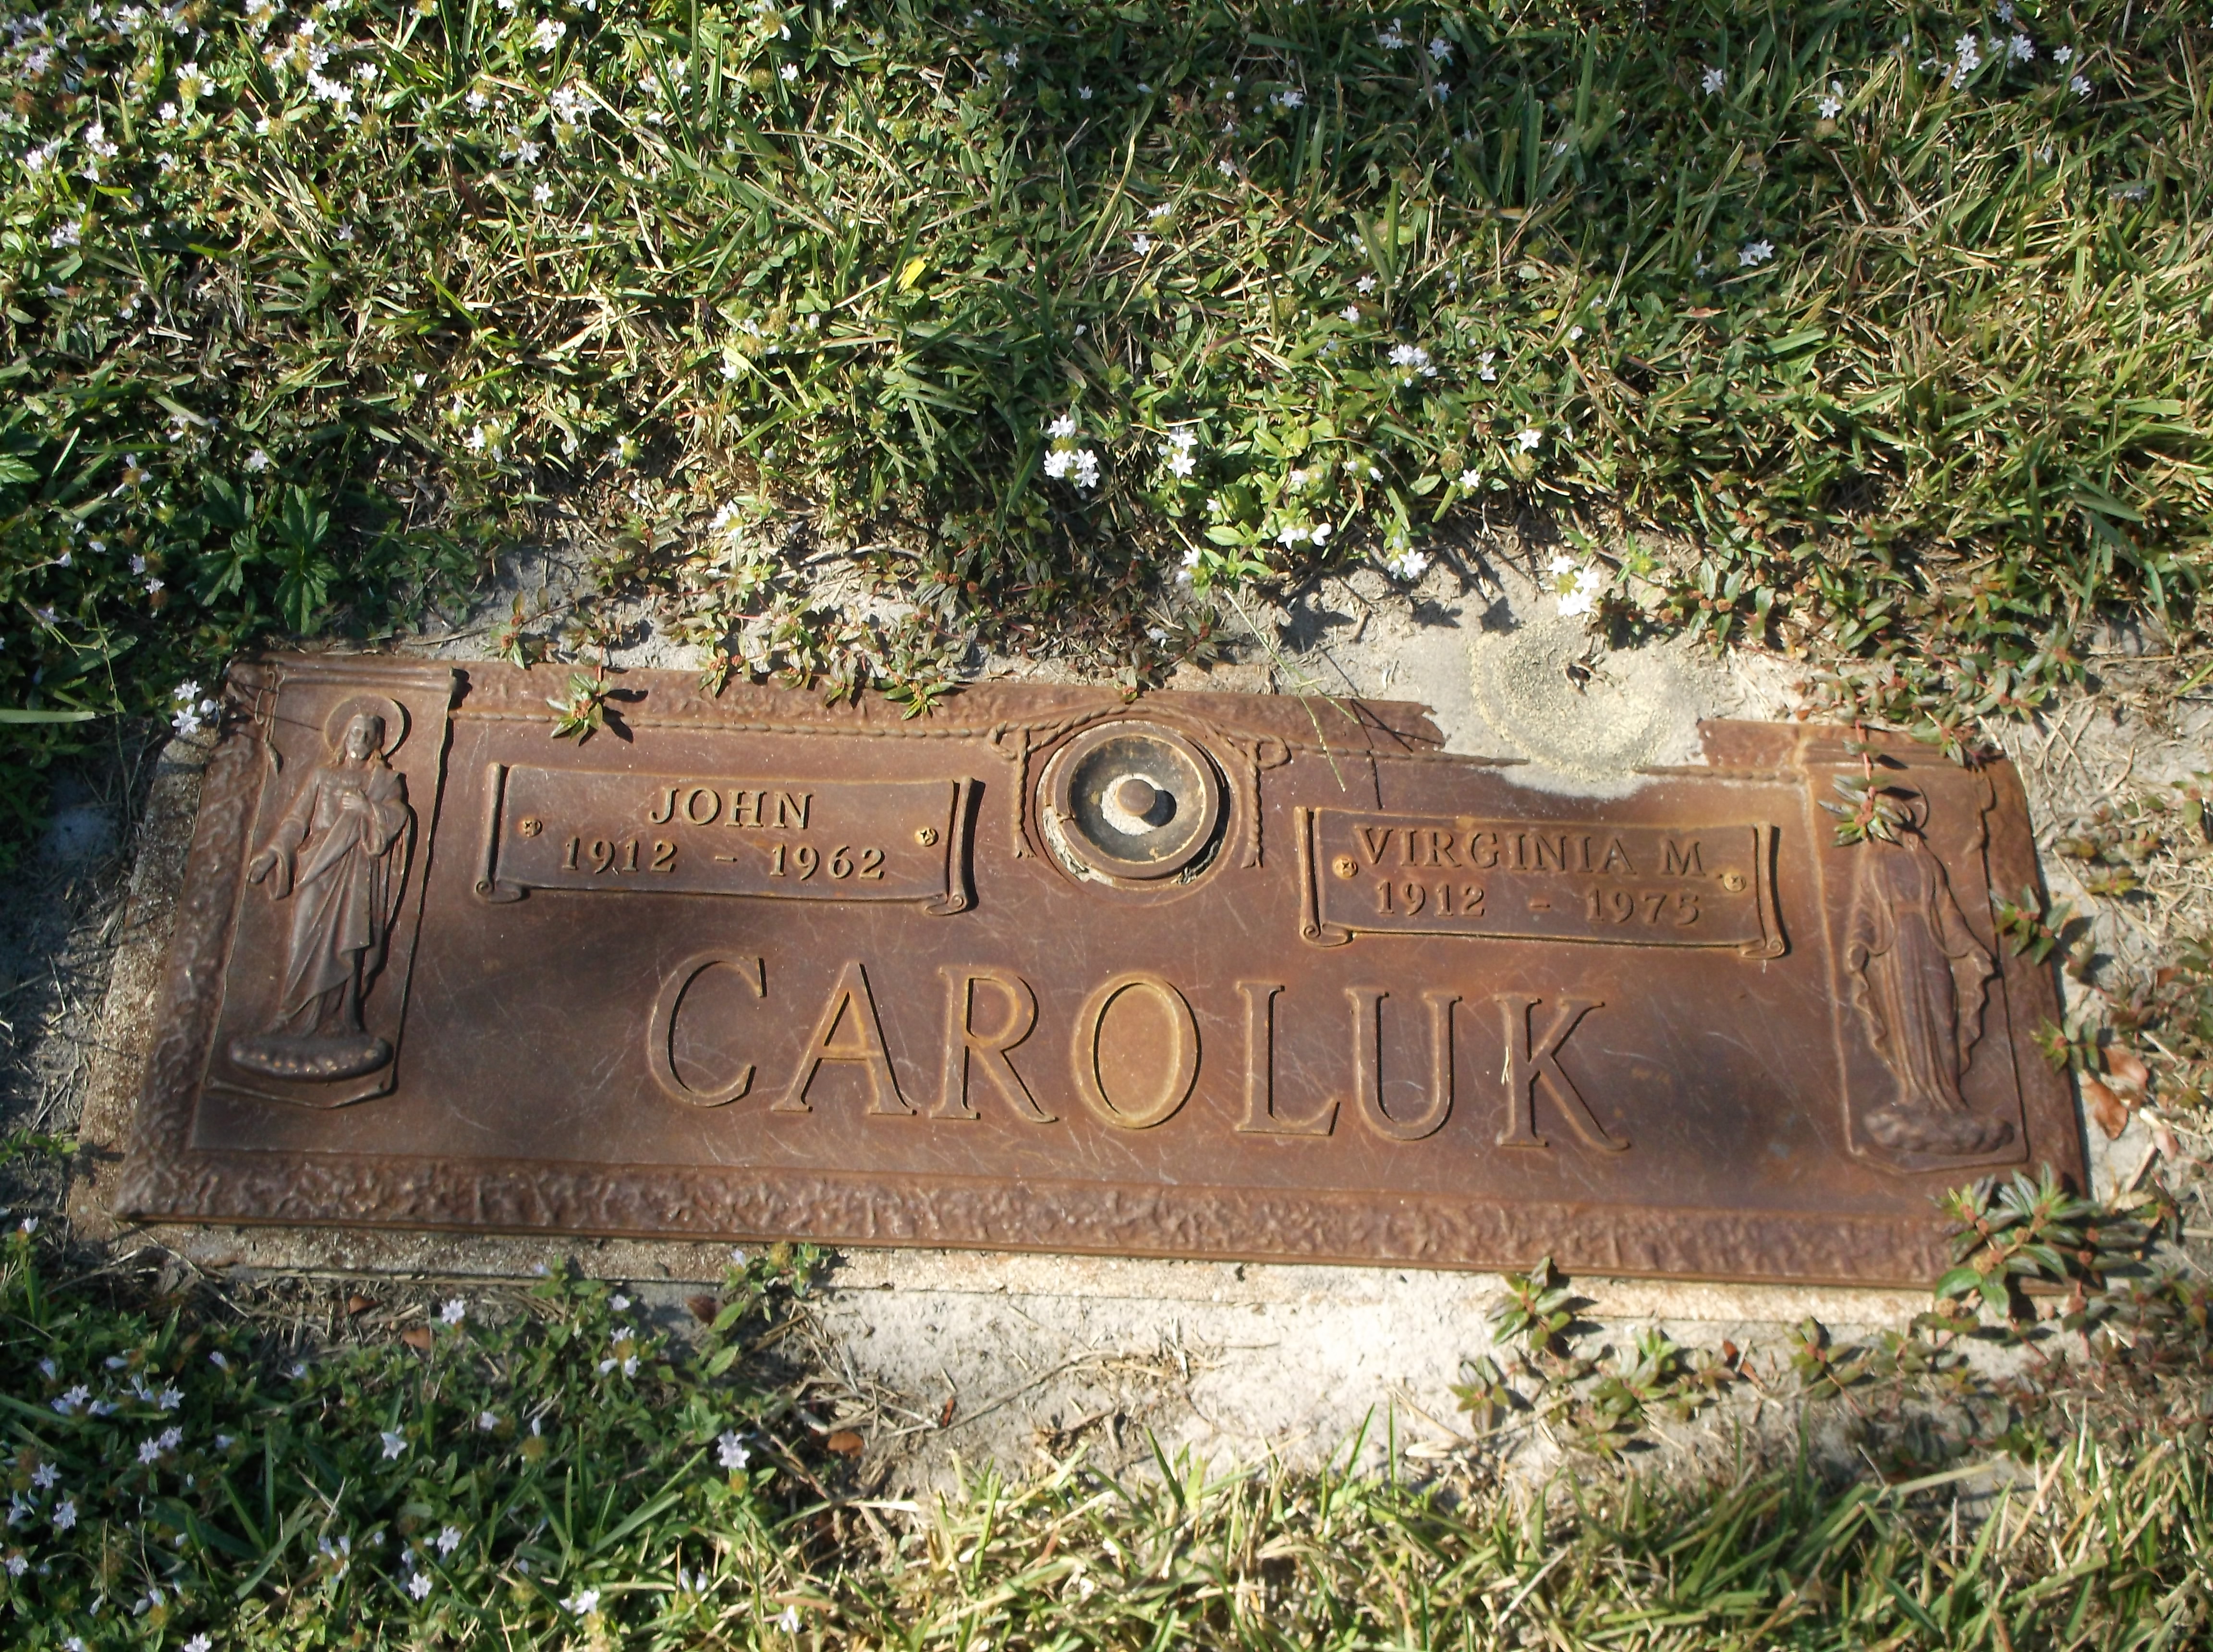 Virginia M Caroluk